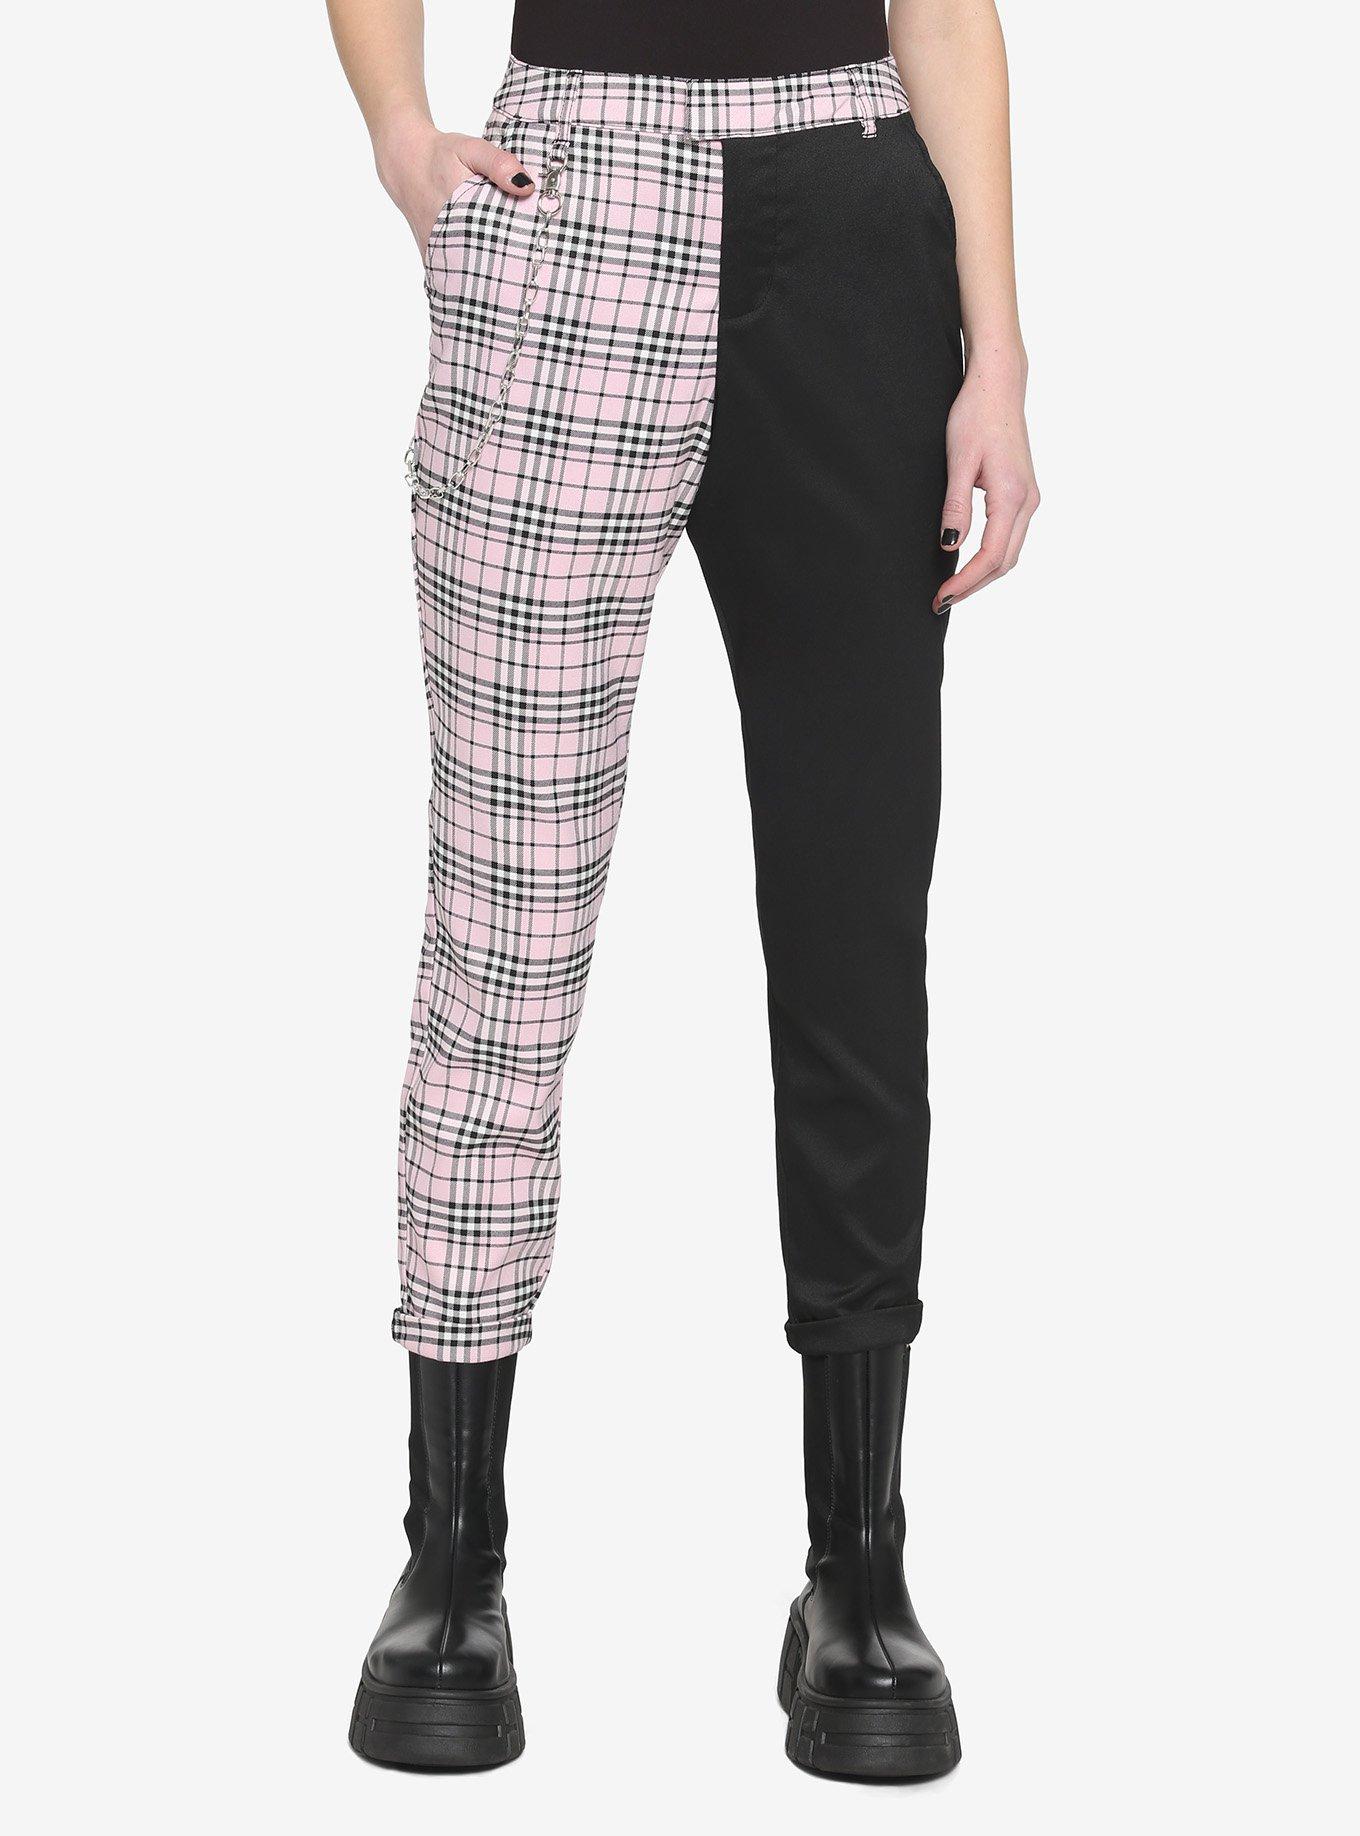 Hot Topic Pink Plaid Pants Size M - $9 (88% Off Retail) - From KekeLani